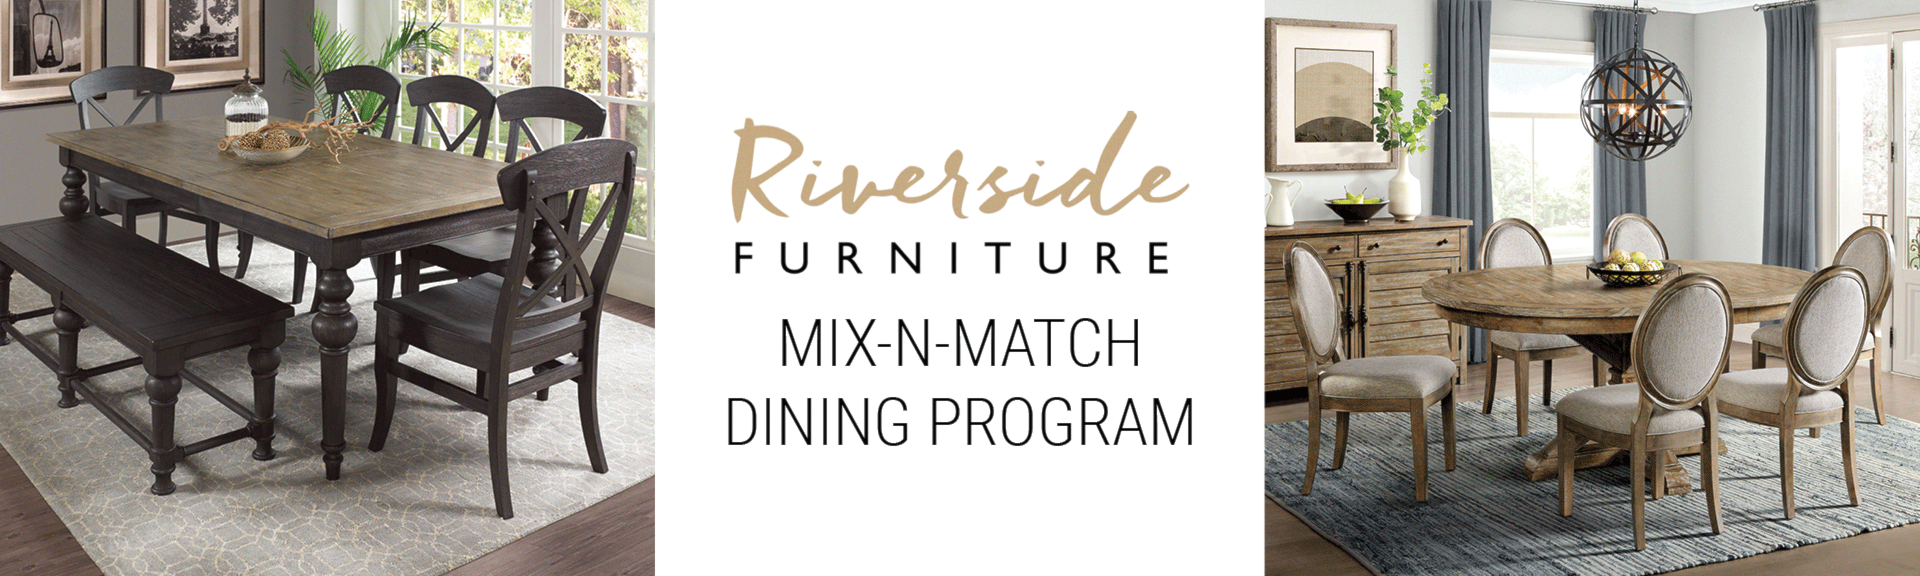 Riverside dining